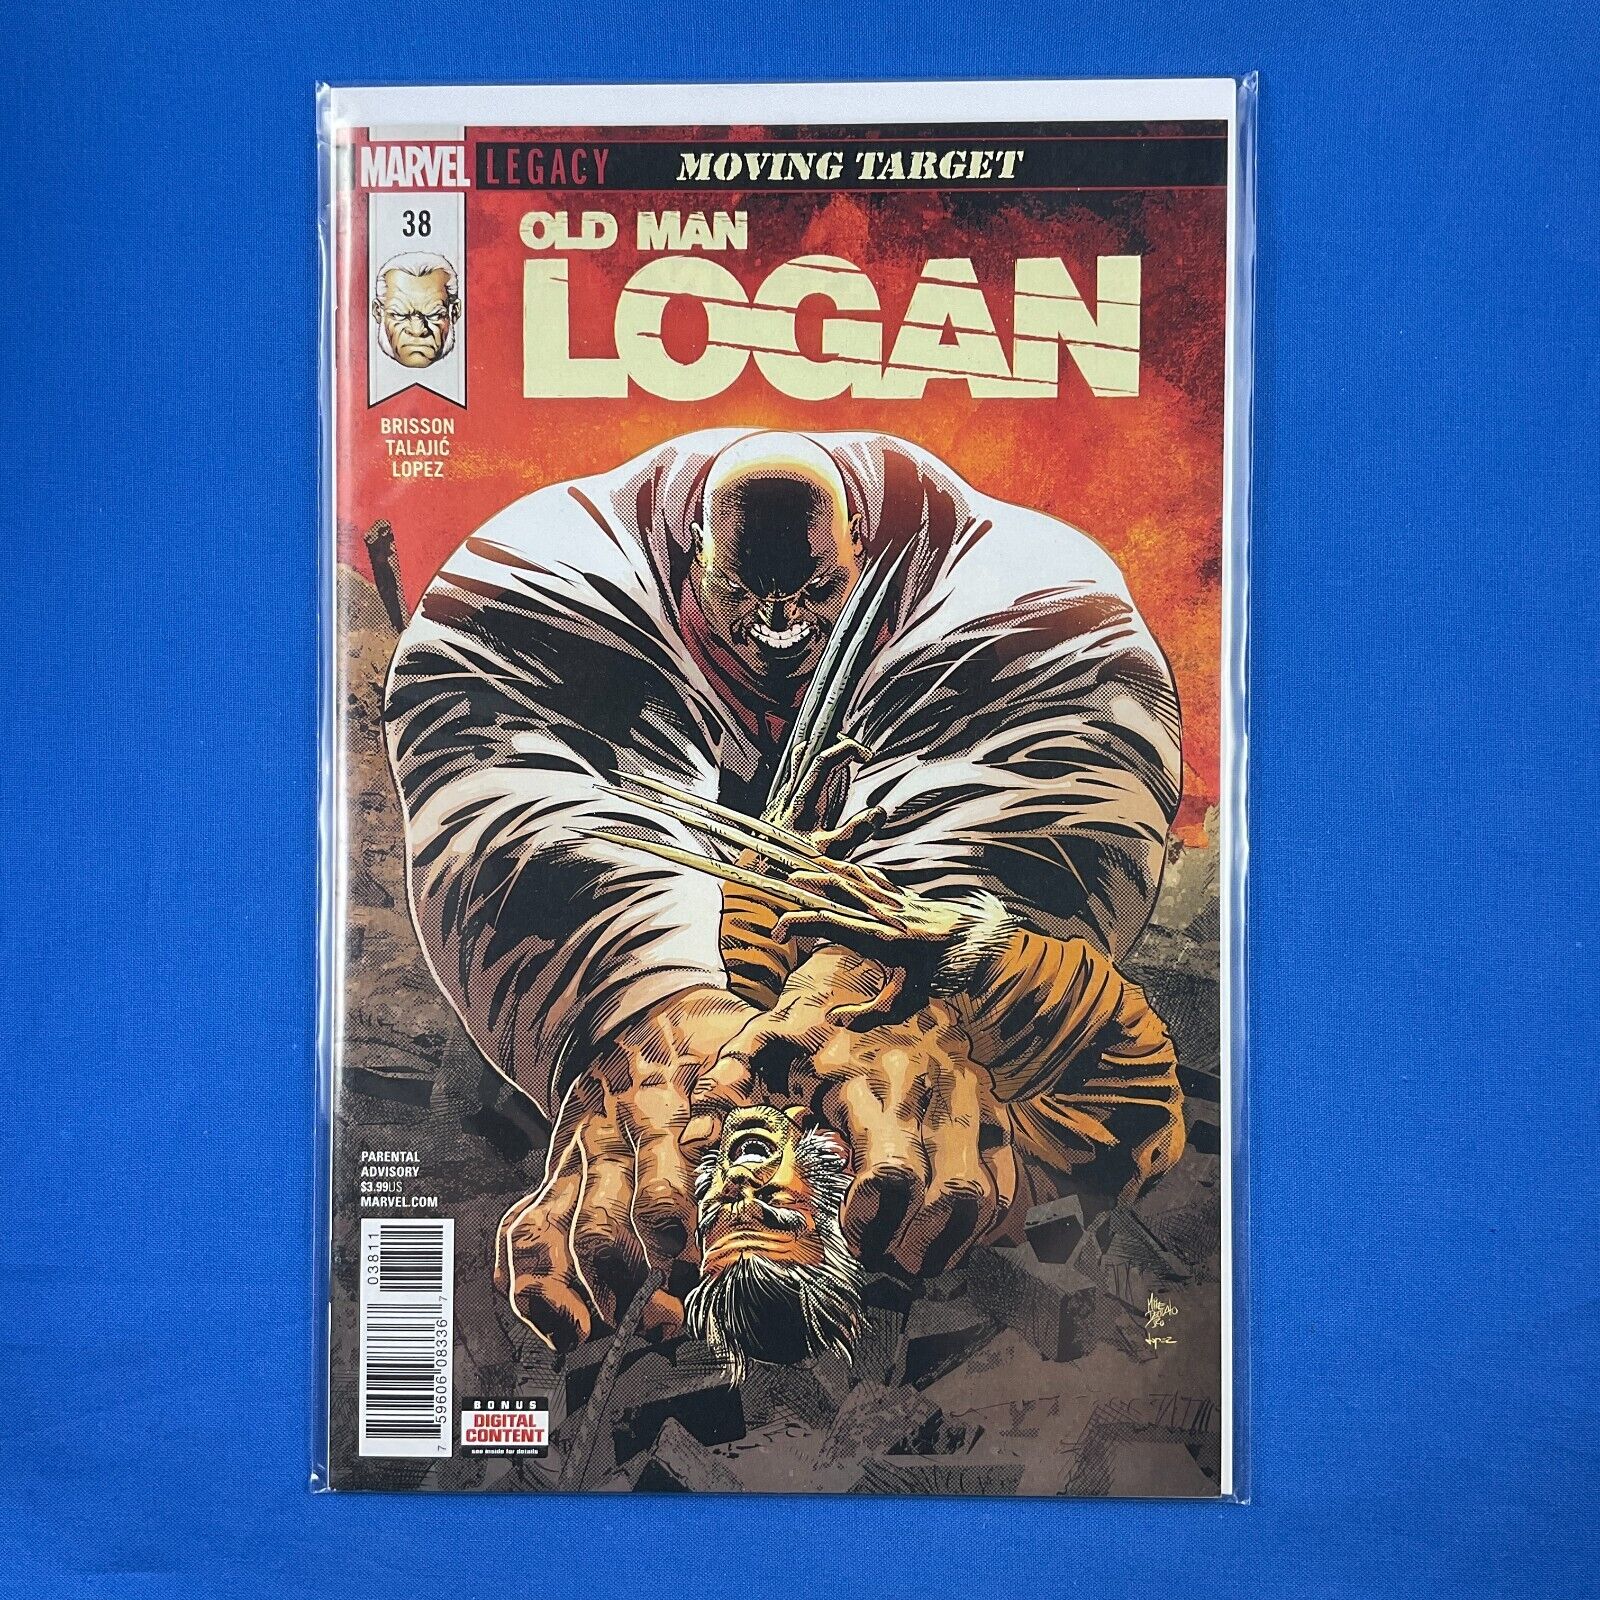 OLD MAN LOGAN #38 Marvel Comics X-Men Wolverine 2018 Moving Target: Part 3